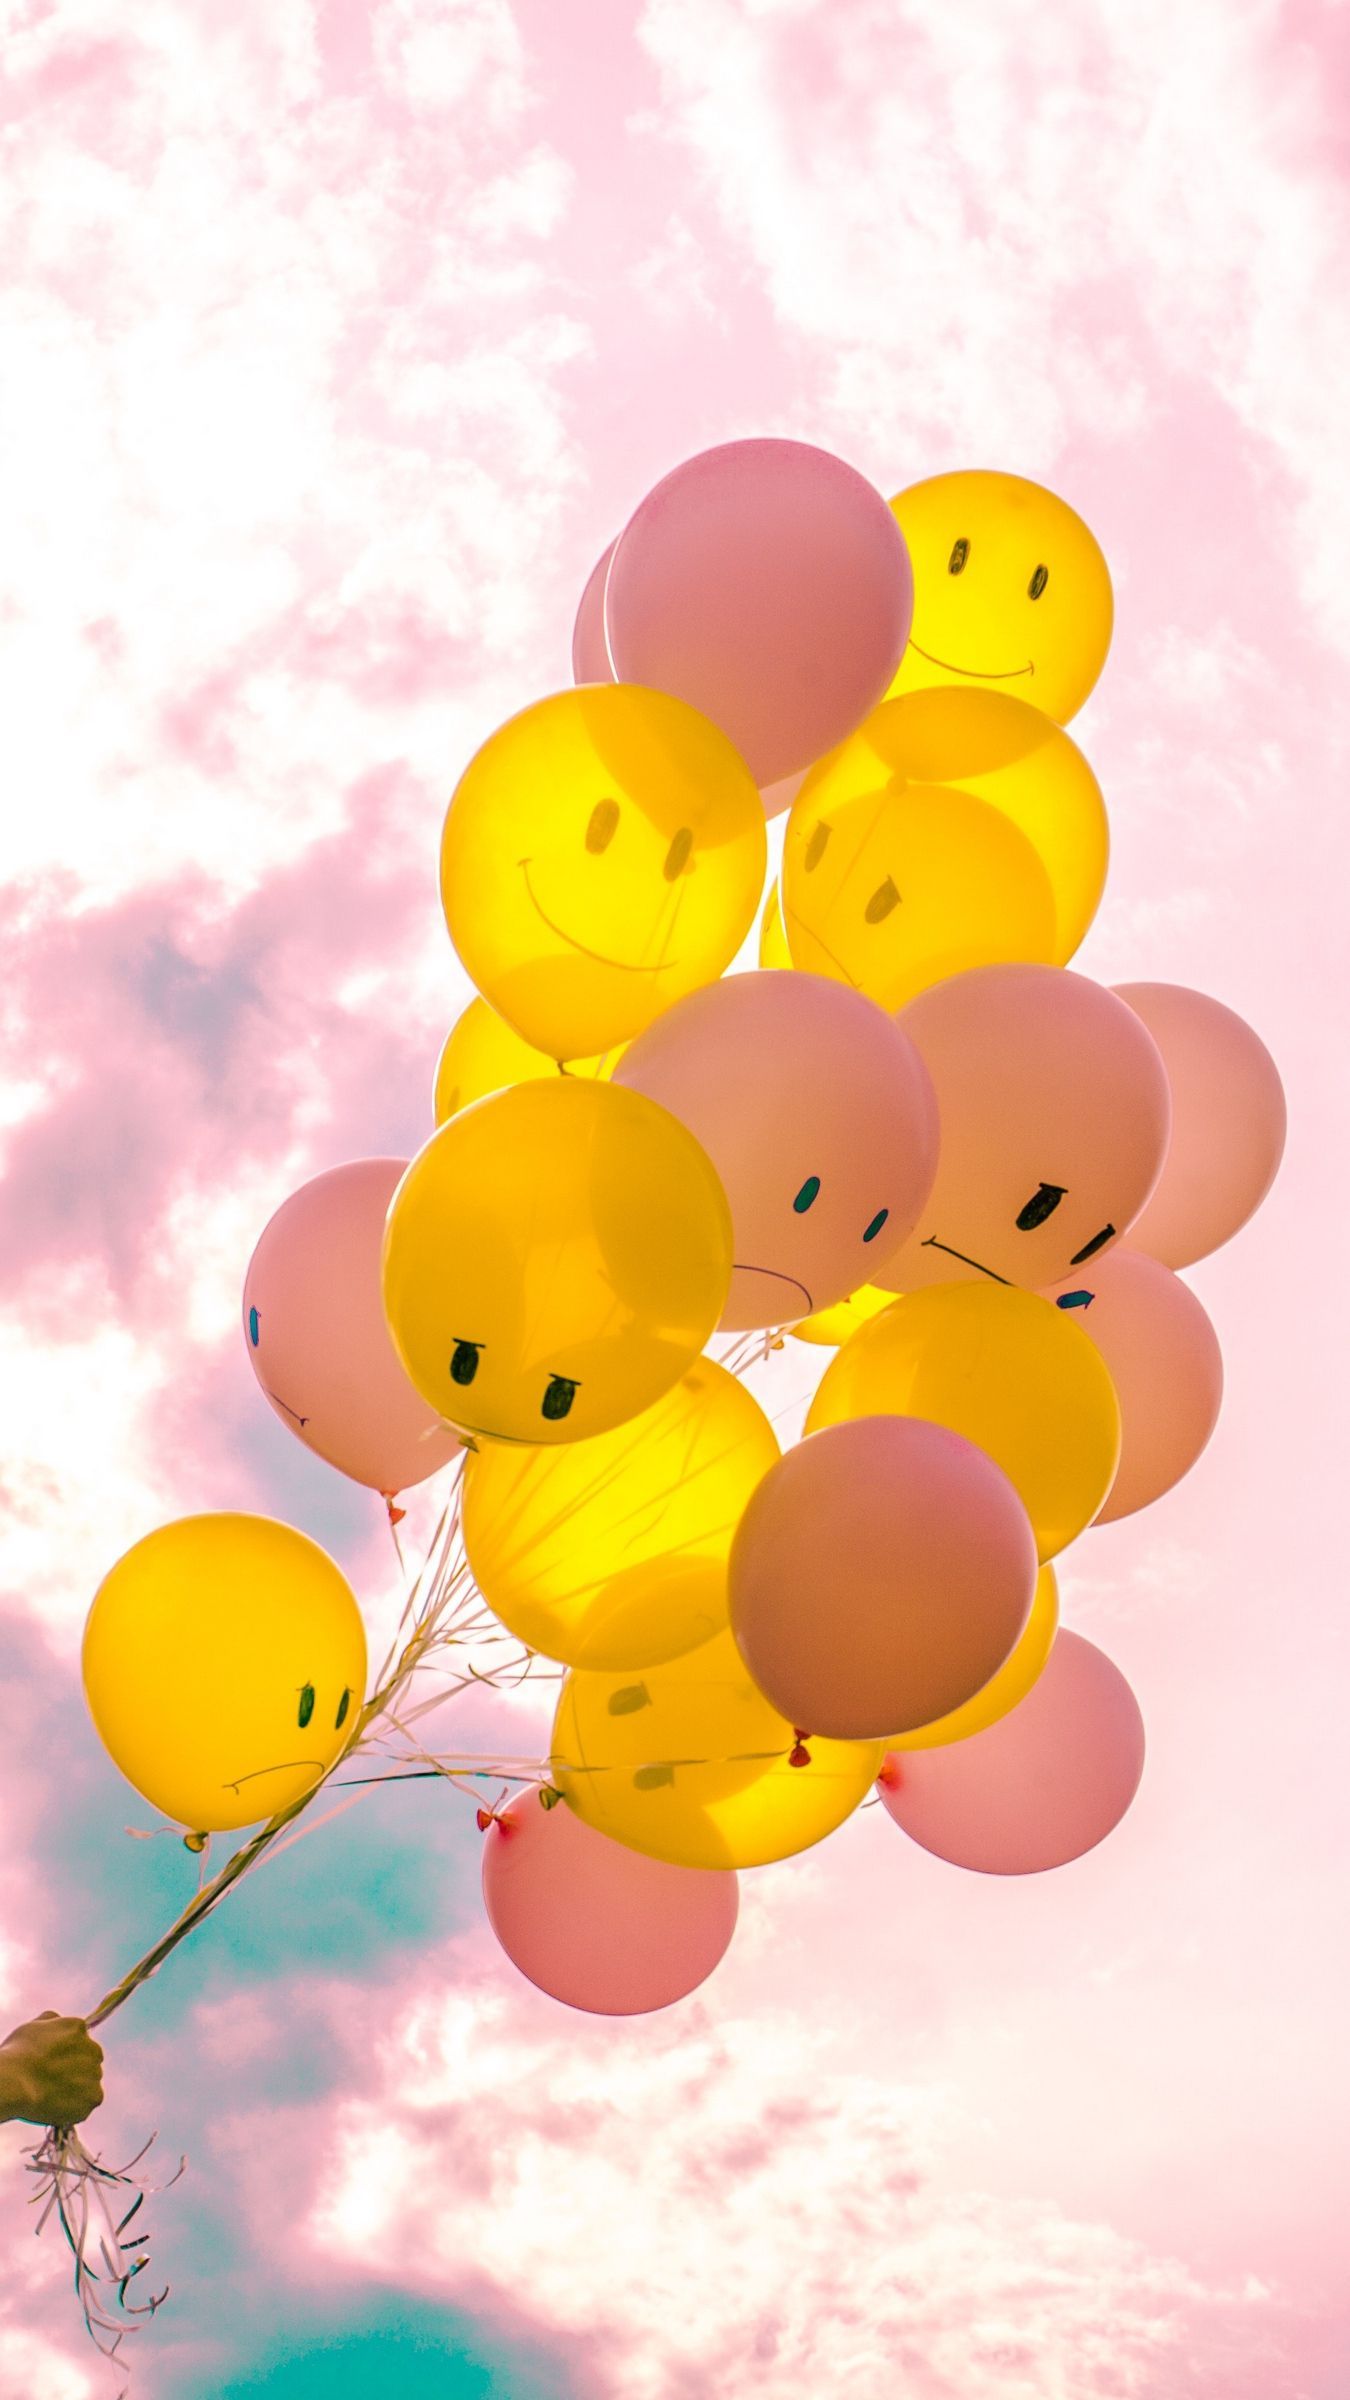 Balloons aesthetic Wallpaper Download